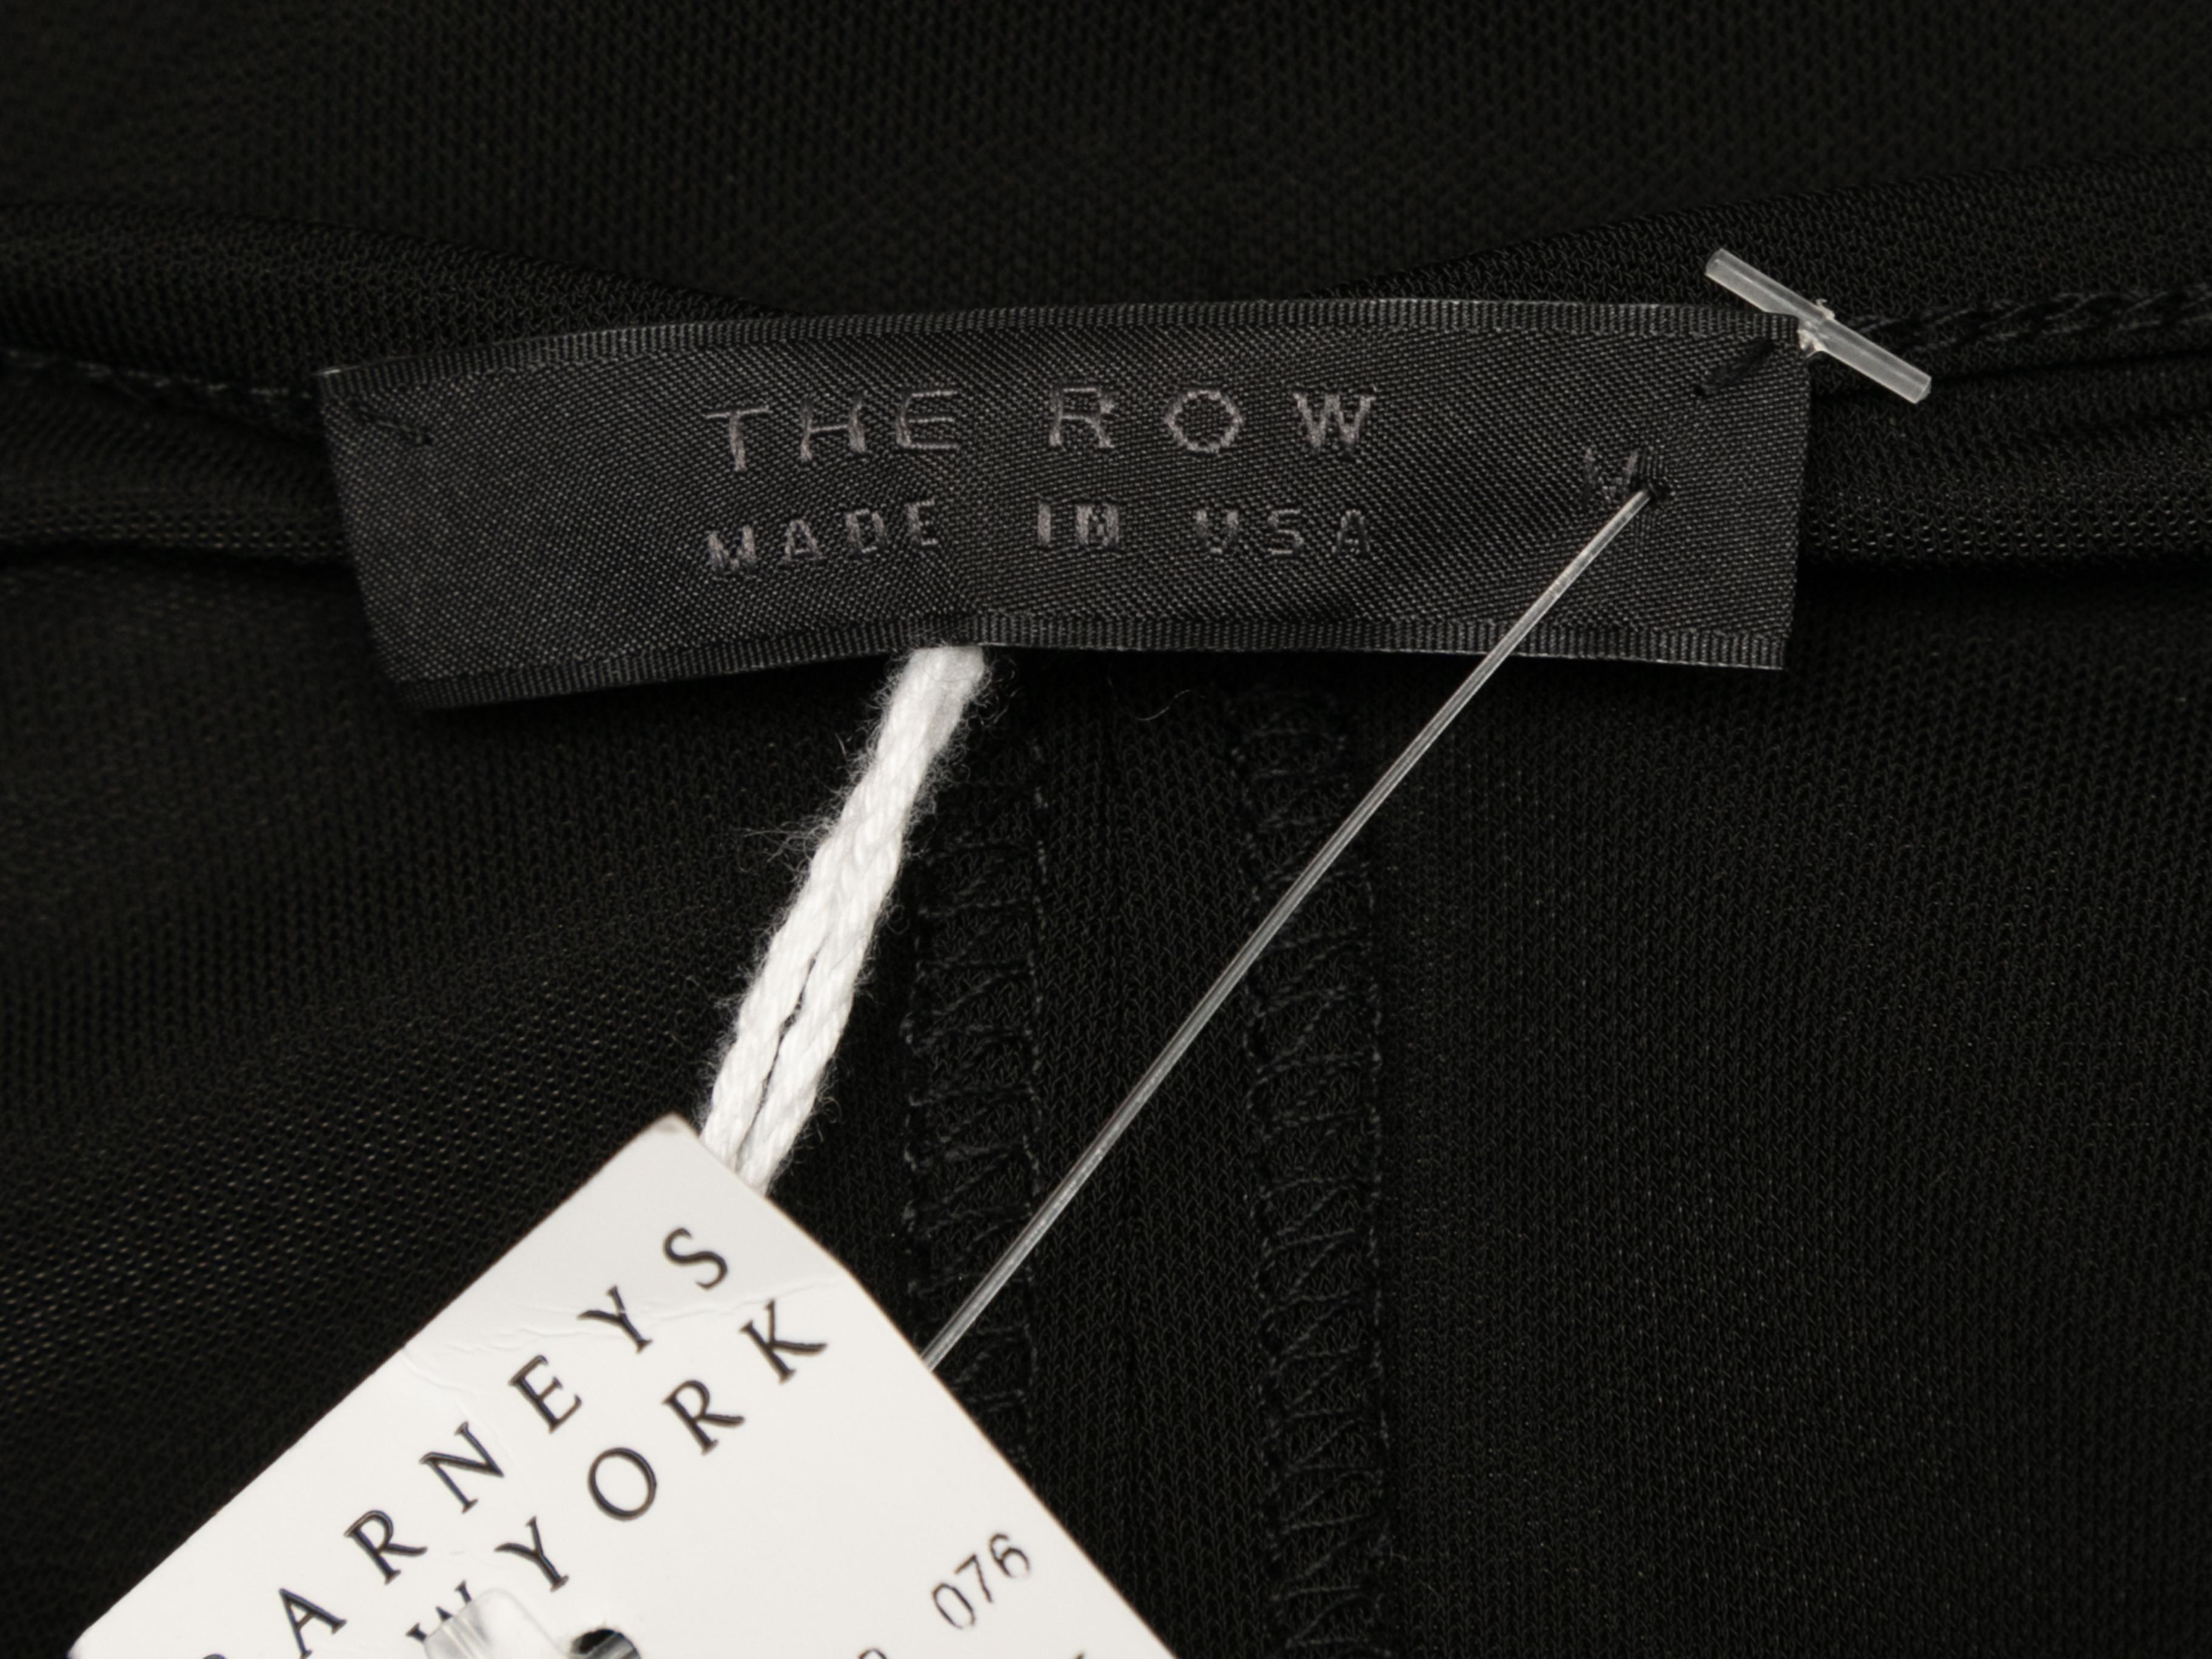 Black Paulette long sleeve maxi dress by The Row. Crew neck. 34